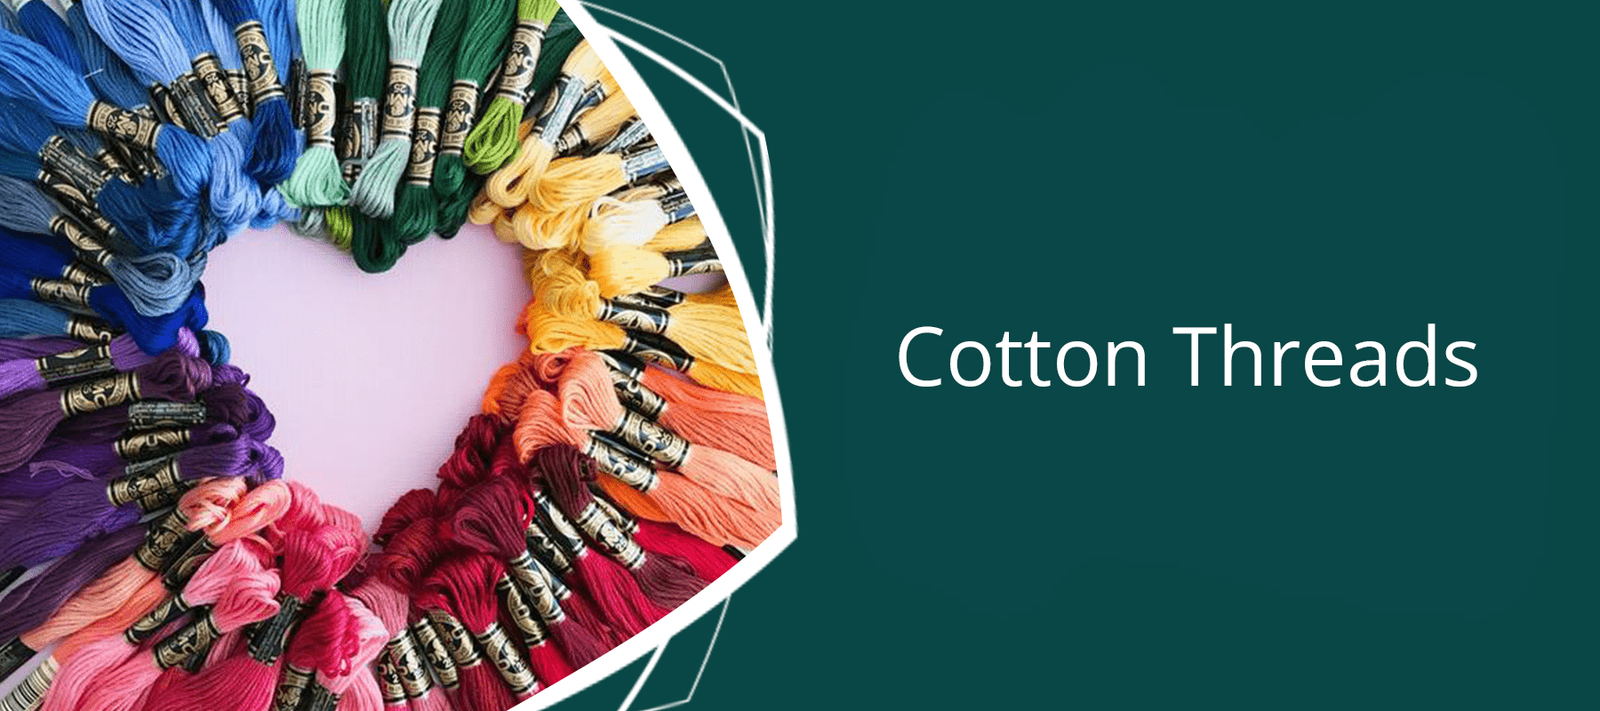 DMC 6-stranded Cotton Embroidery Floss, Bulk Thread Bundle, Needlework  Beginner Supply Set, Spring Colors Hand Embroidery Floss Skeins Kit 